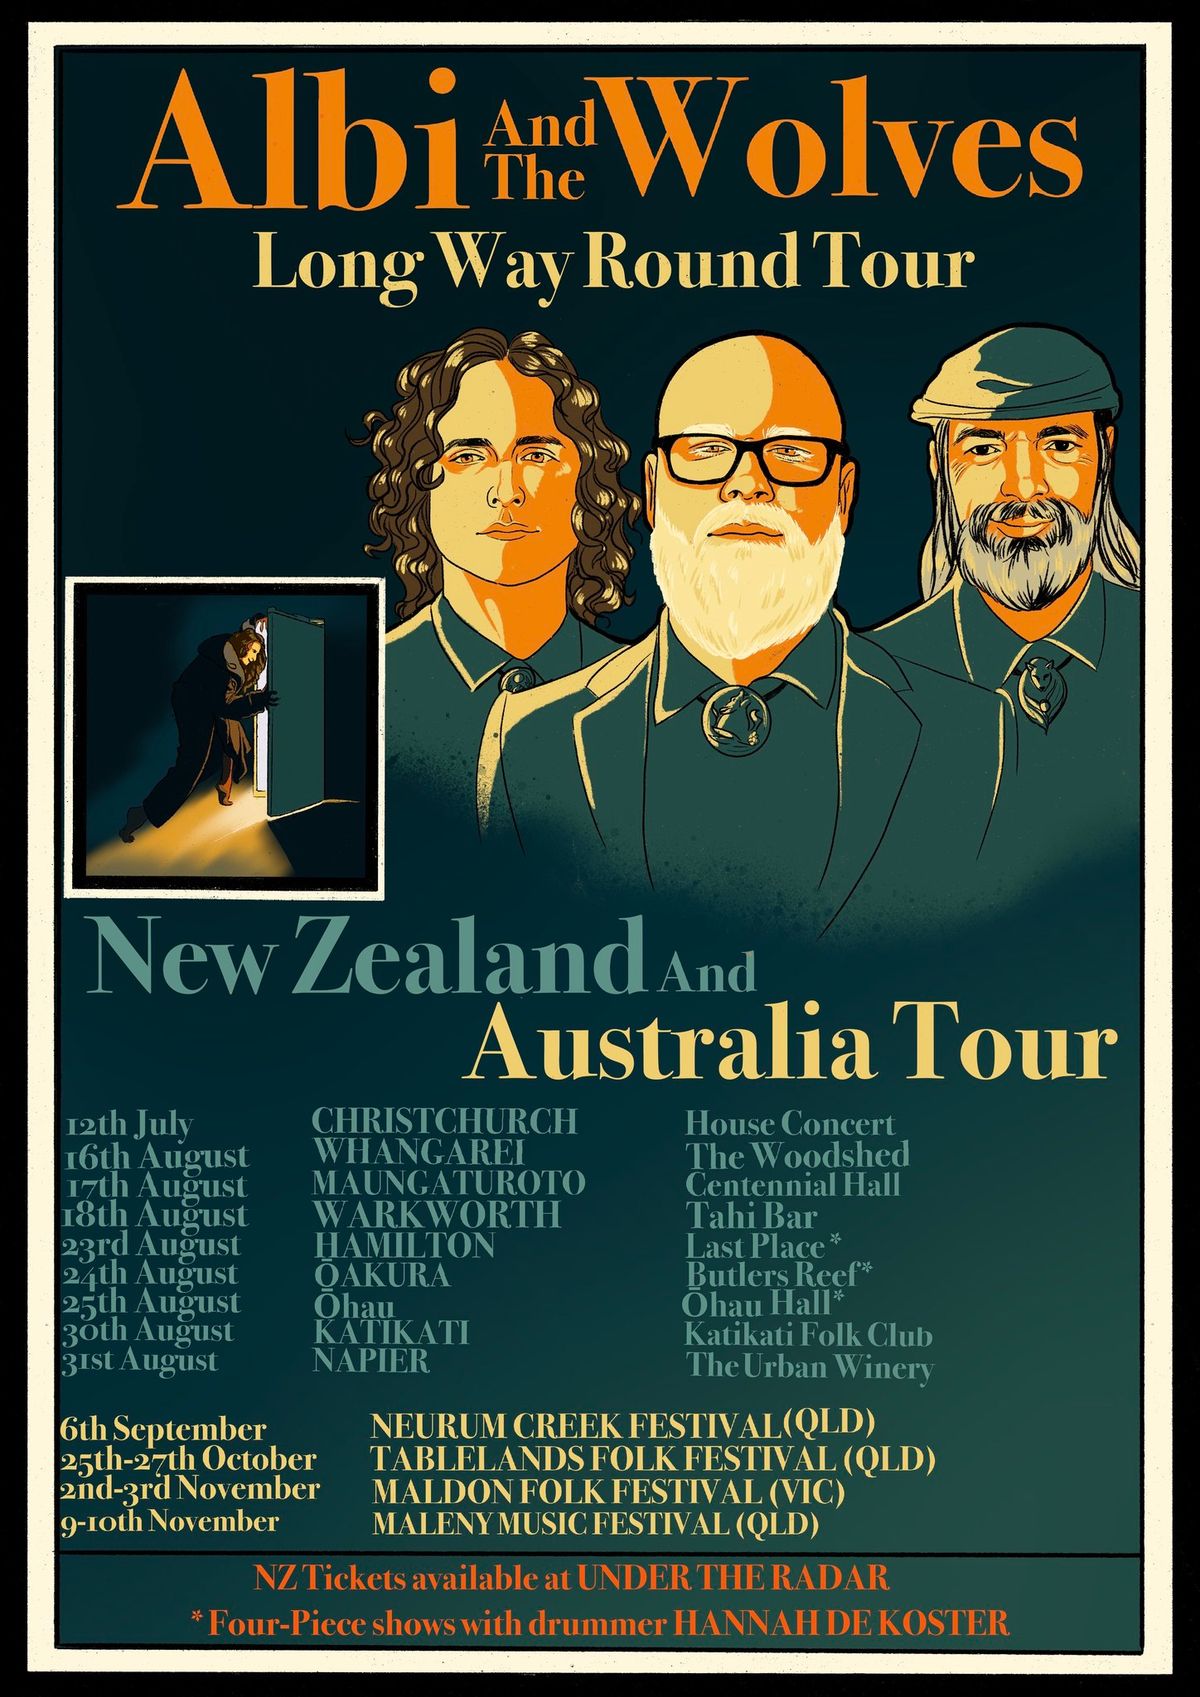 Long Way Round Tour - Christchurch